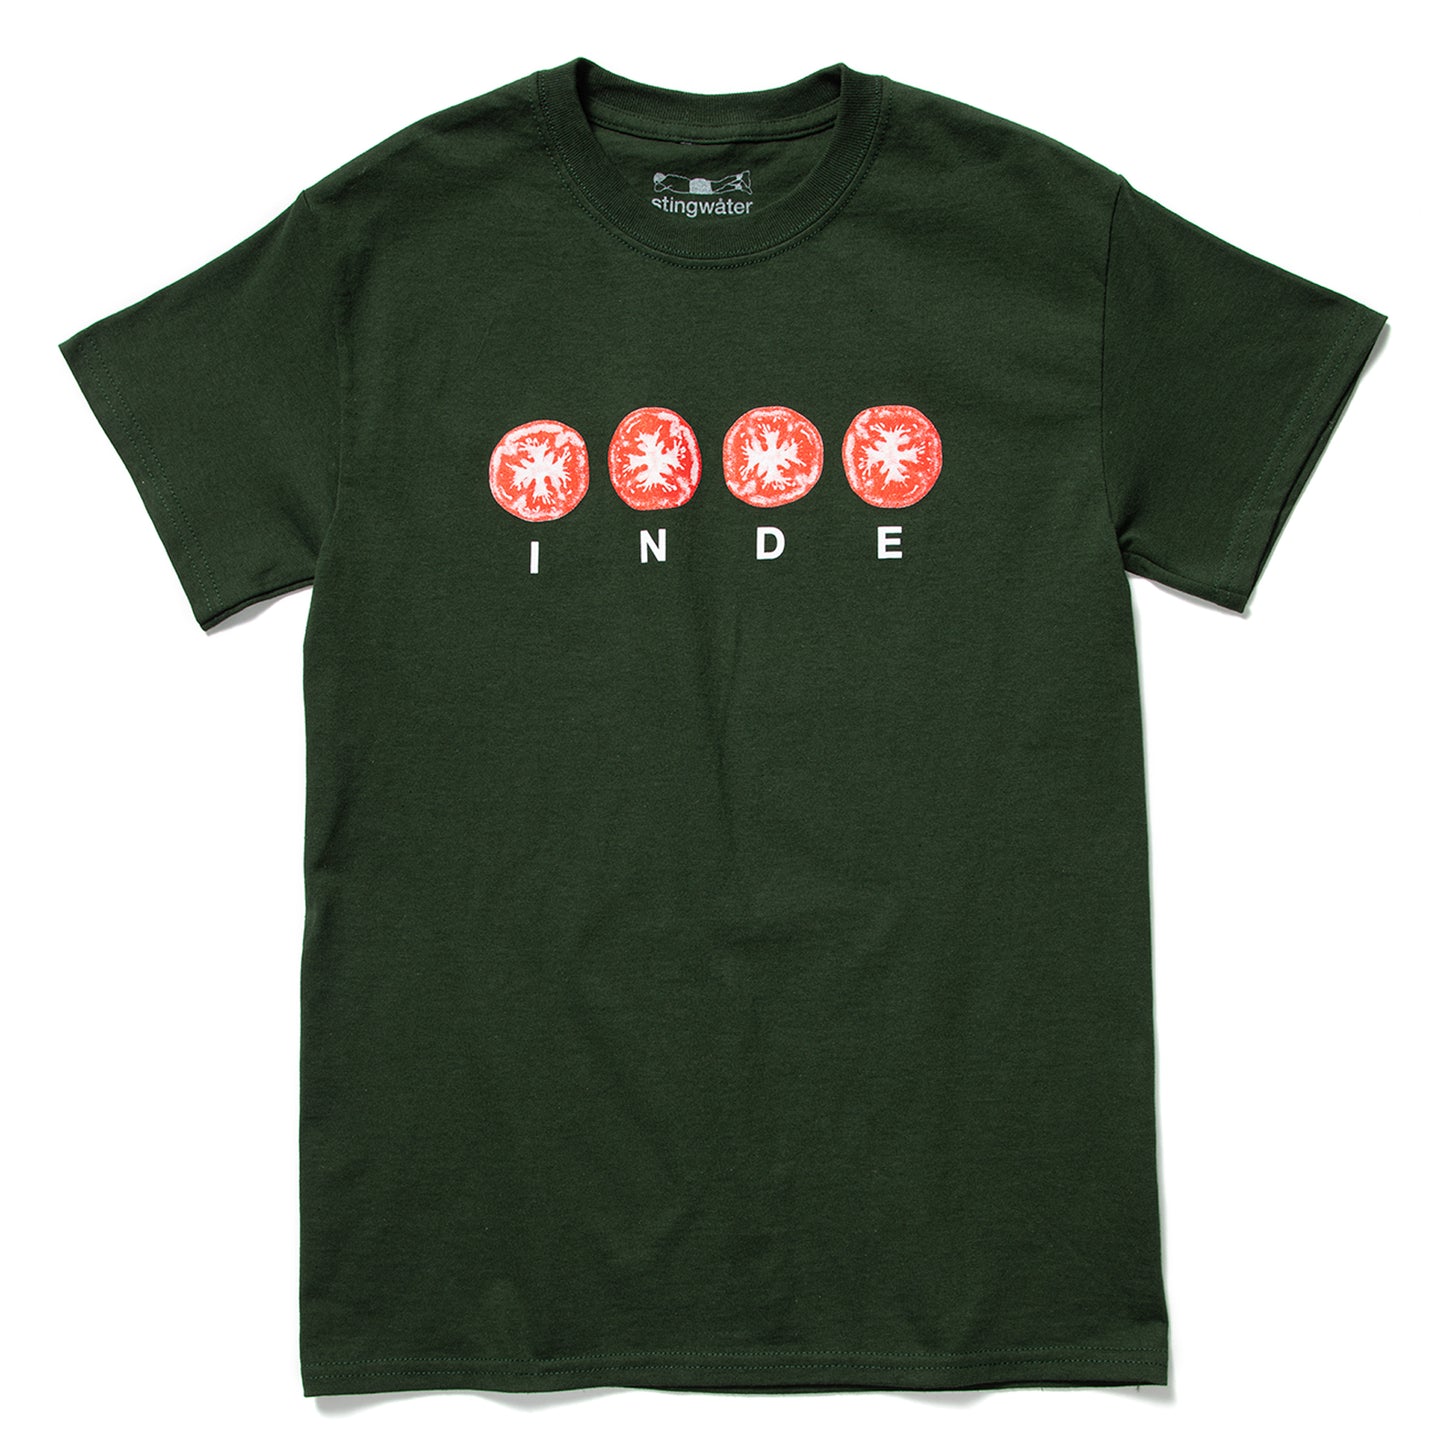 Stingwater INDE T Shirt (Forest Green)